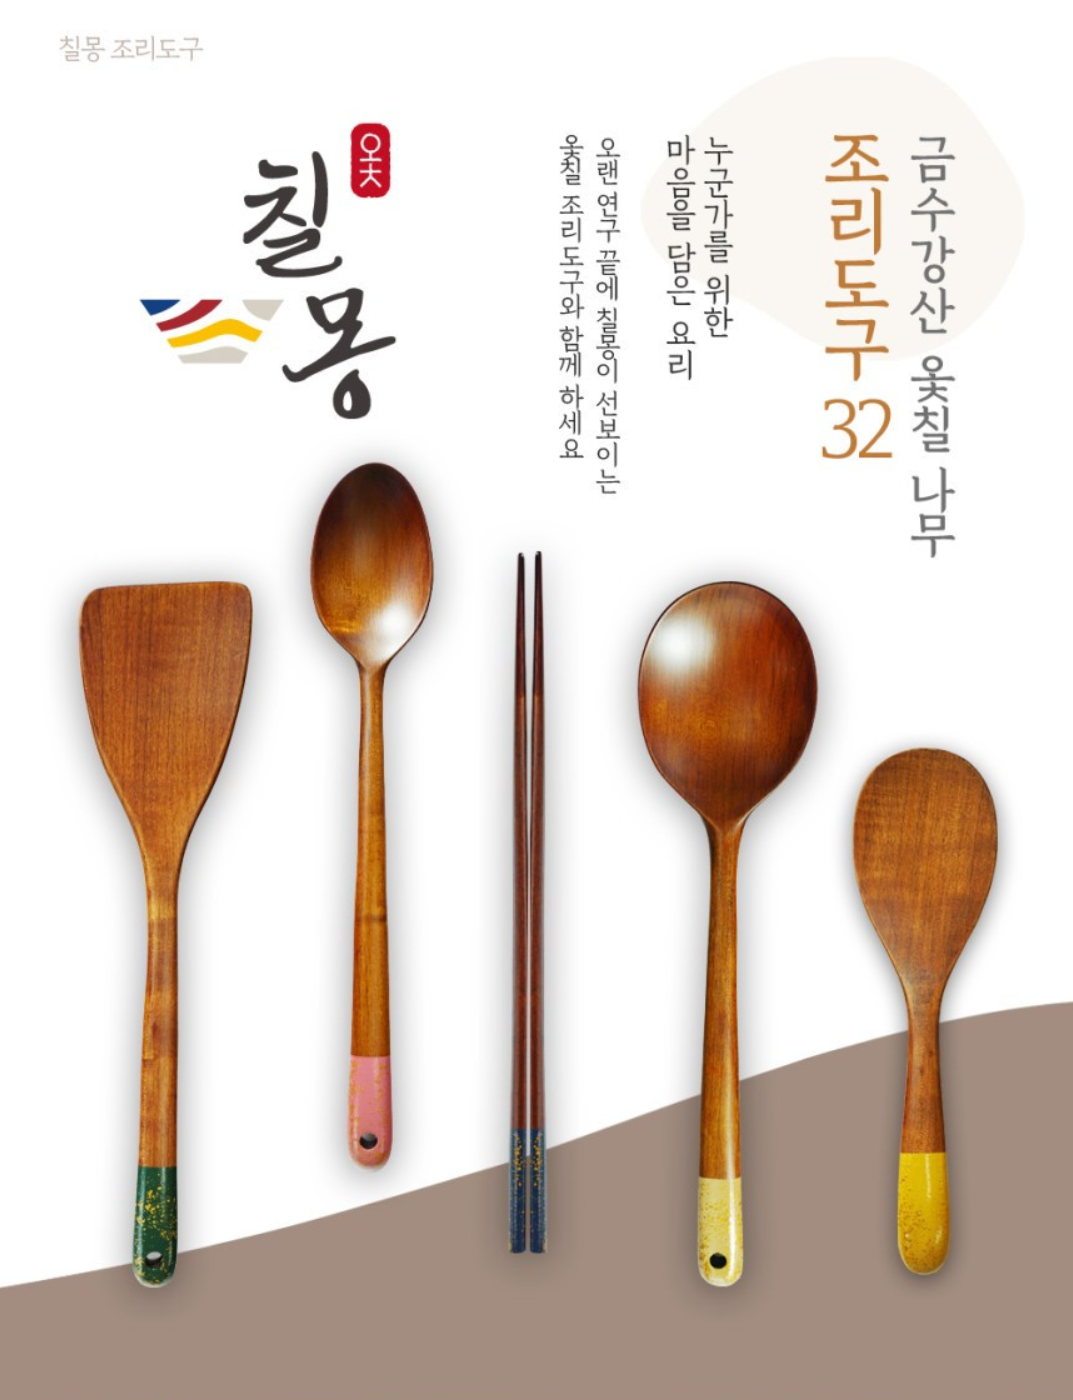 [Chilmong] Korean Ottchil Kitchen Tools Set (5 Pcs)